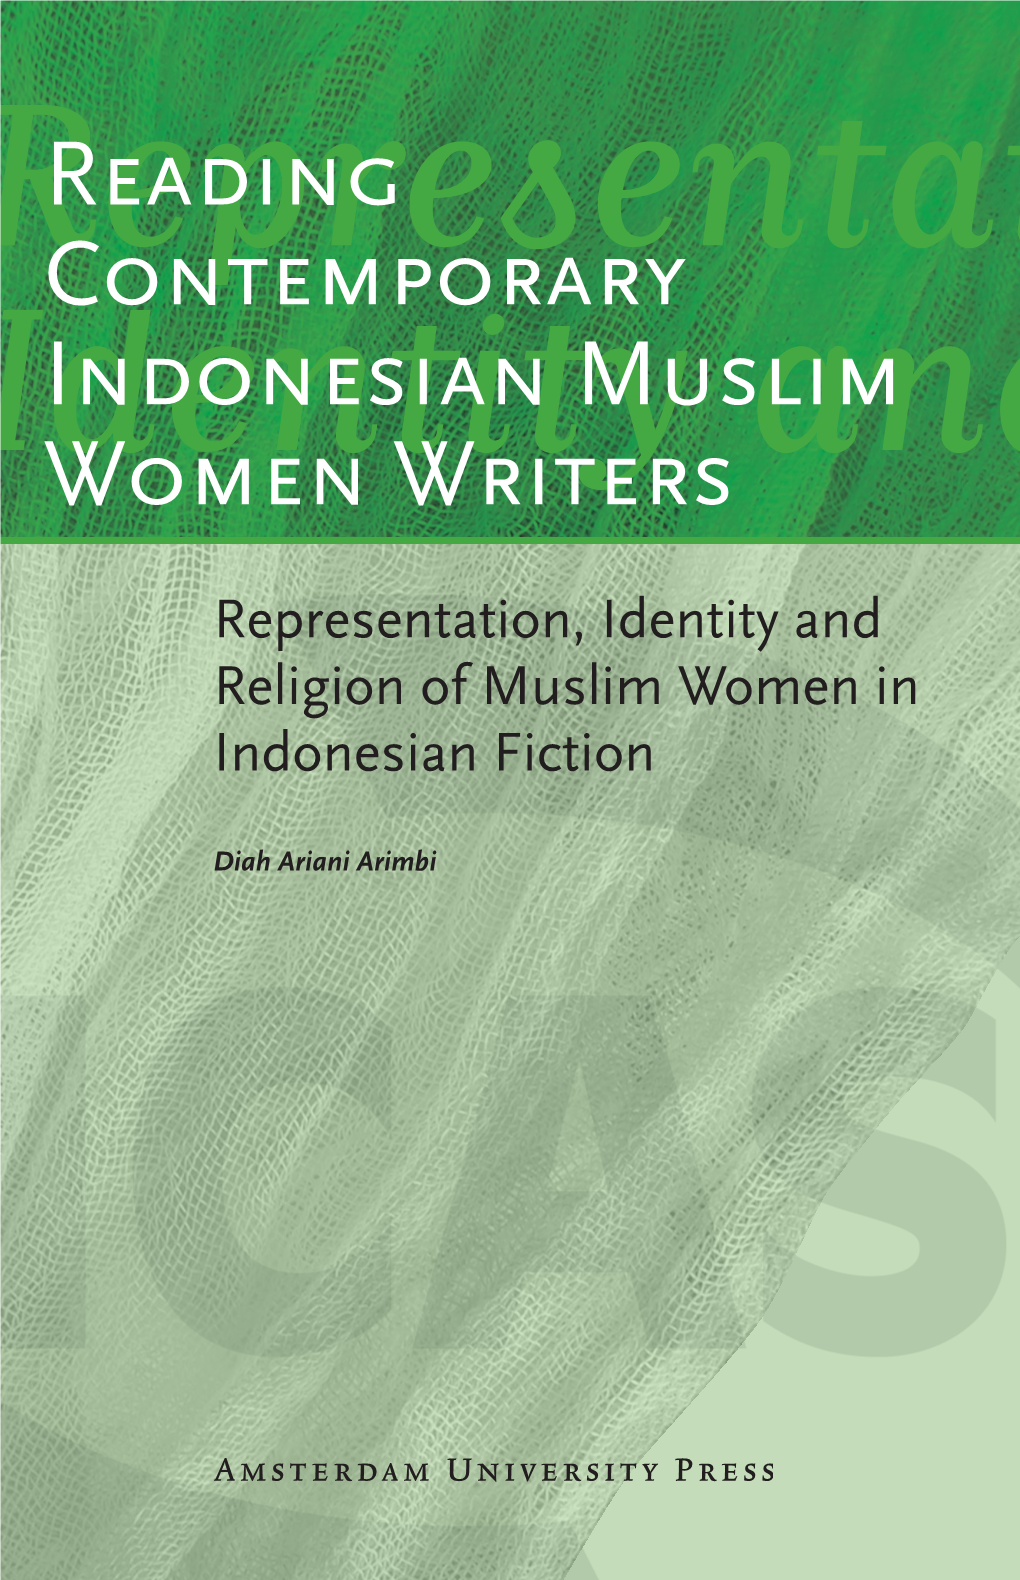 READING Contemporary Indonesian Muslim Women